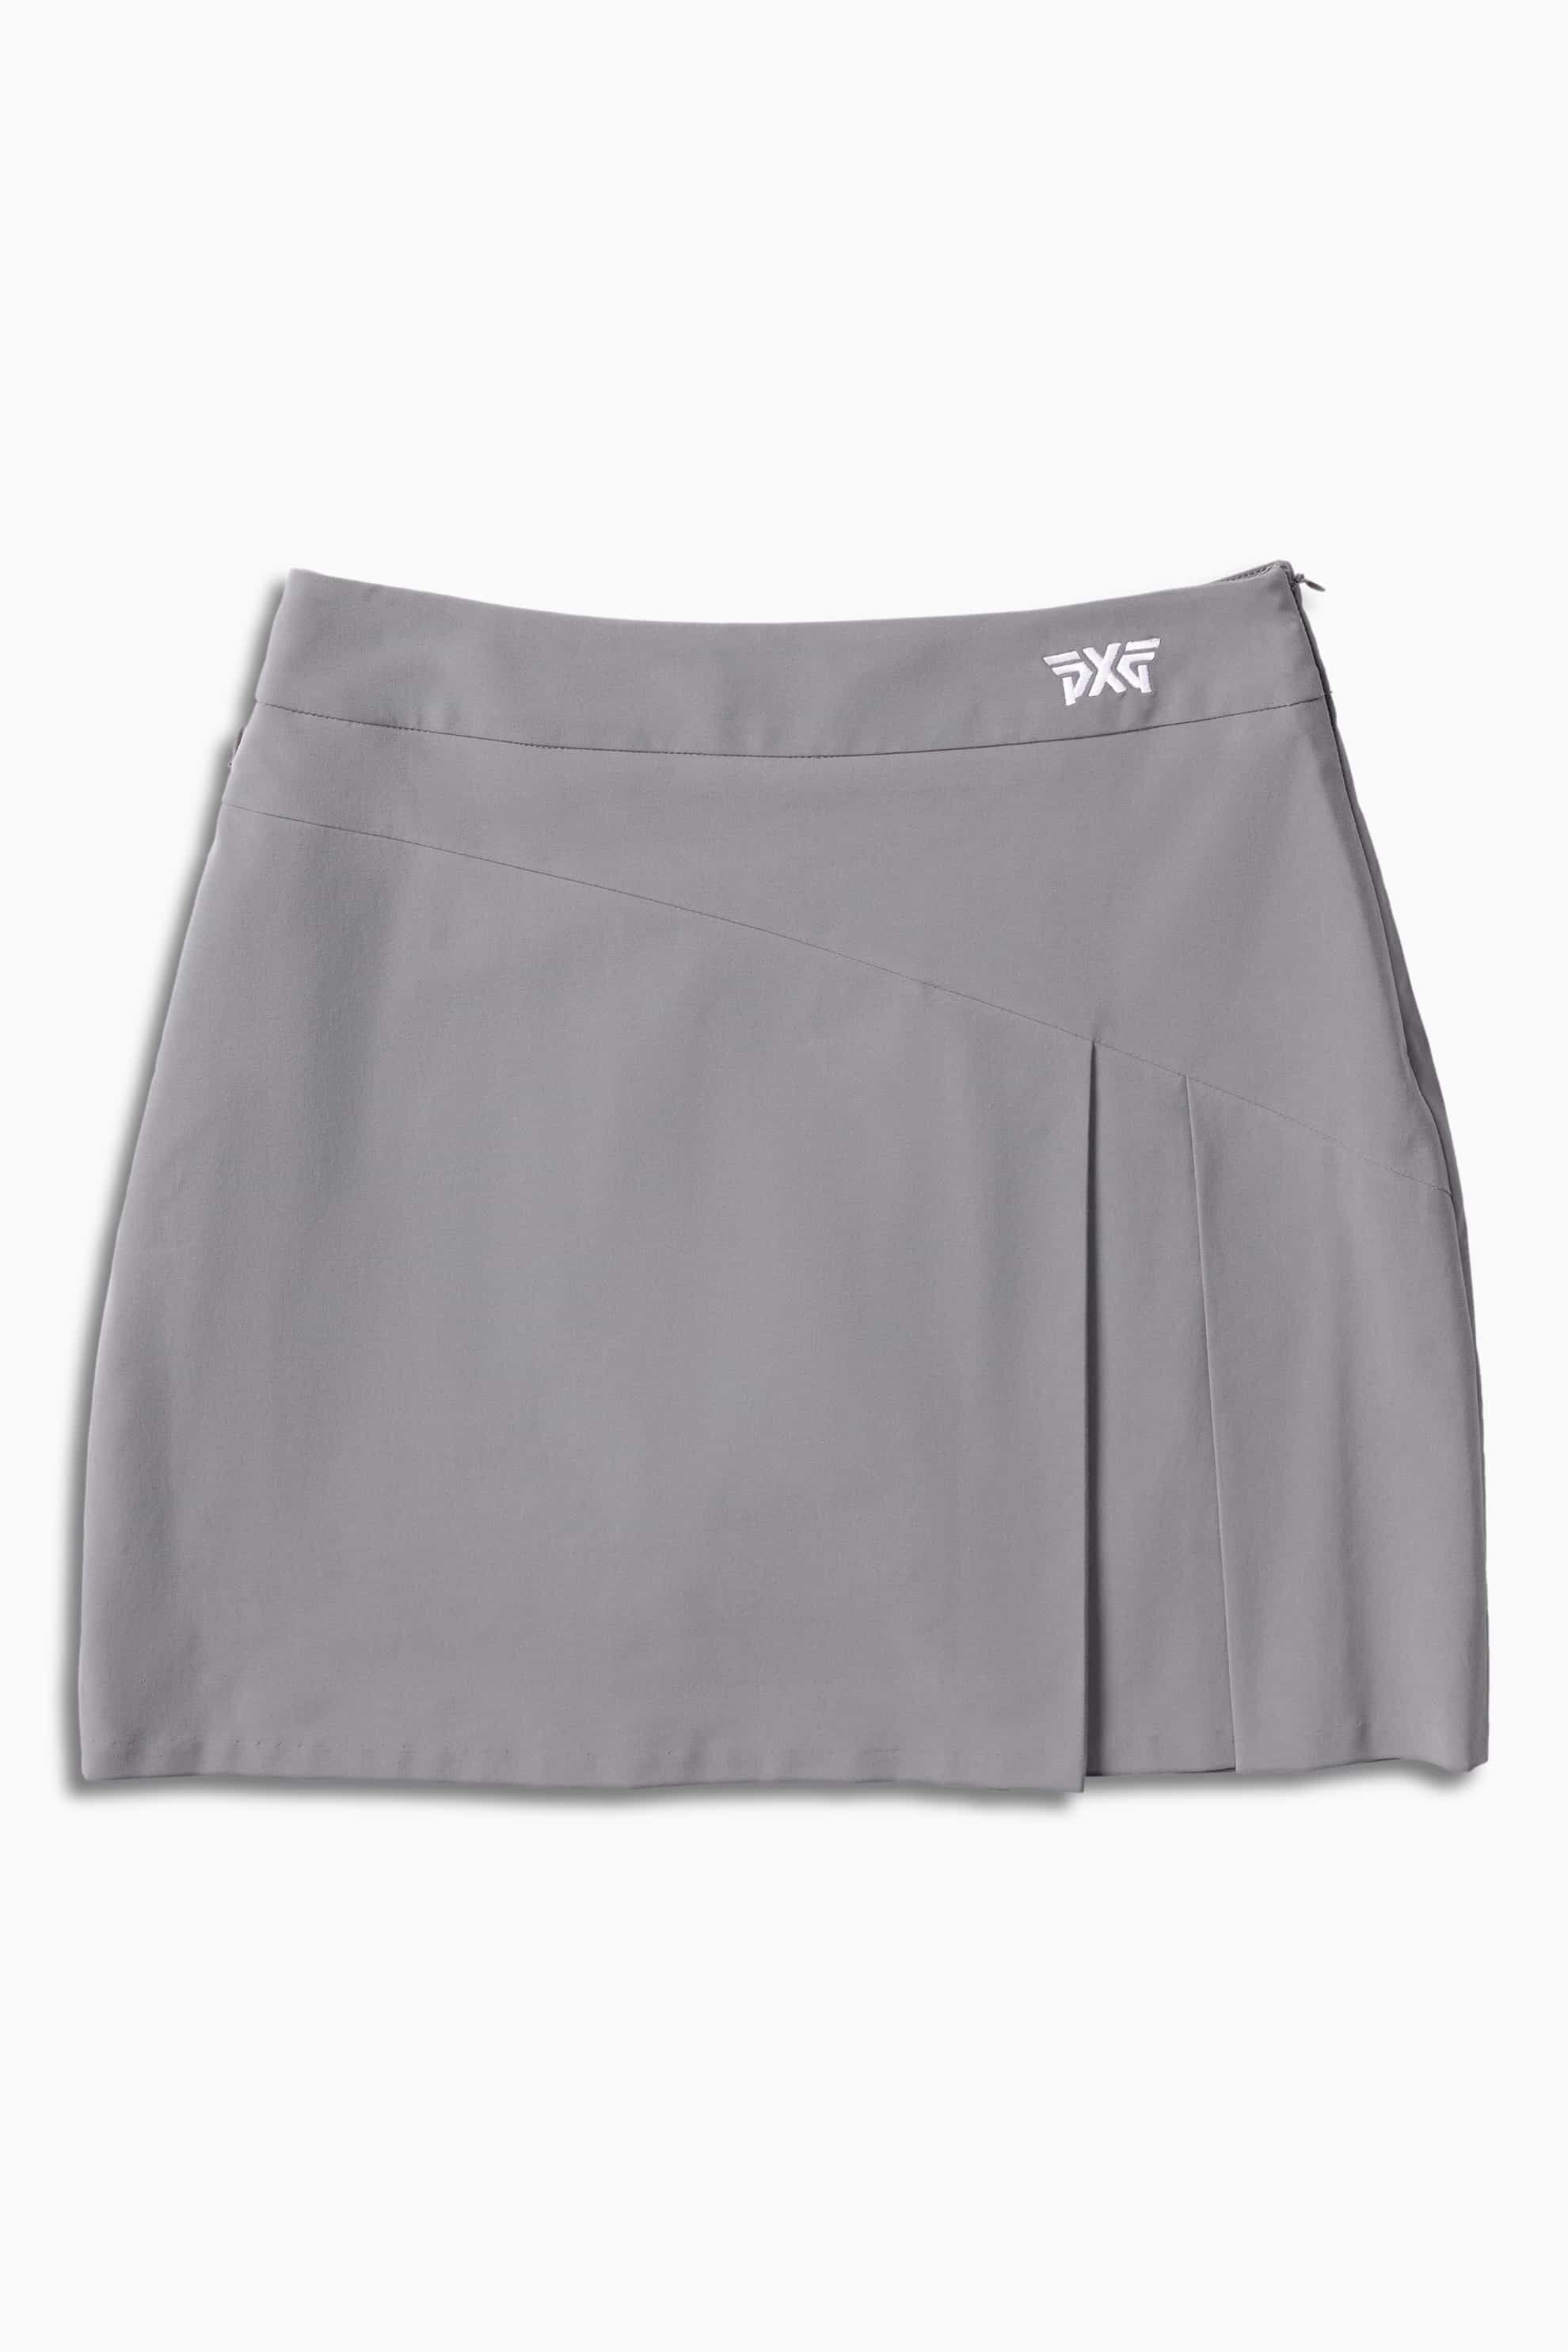 Shop Women's Golf ボトムス - Pants, Skirts, Shorts and Leggings 